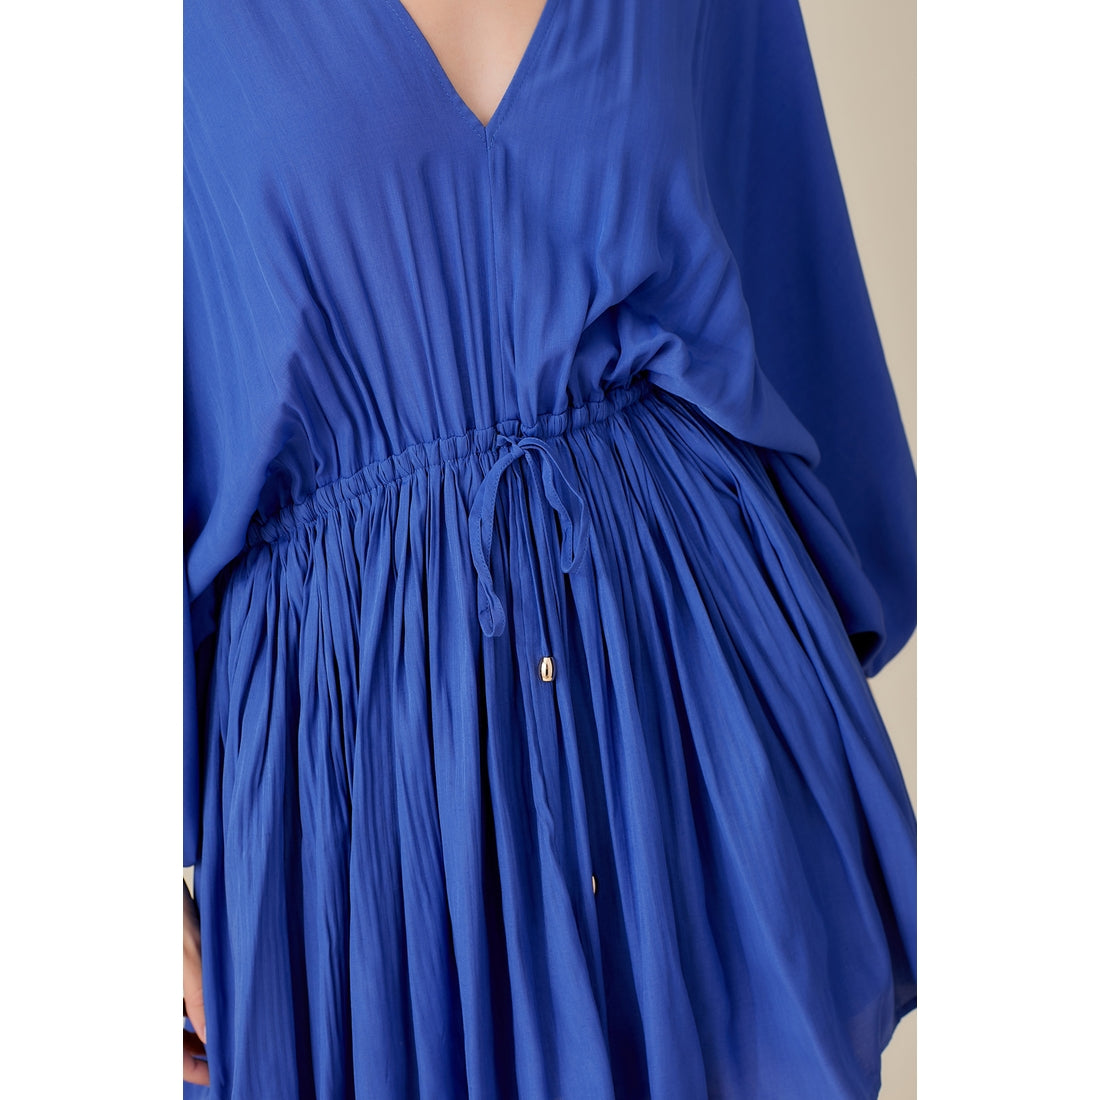 Blue Pacific Mini Dress in Size S, M, or L